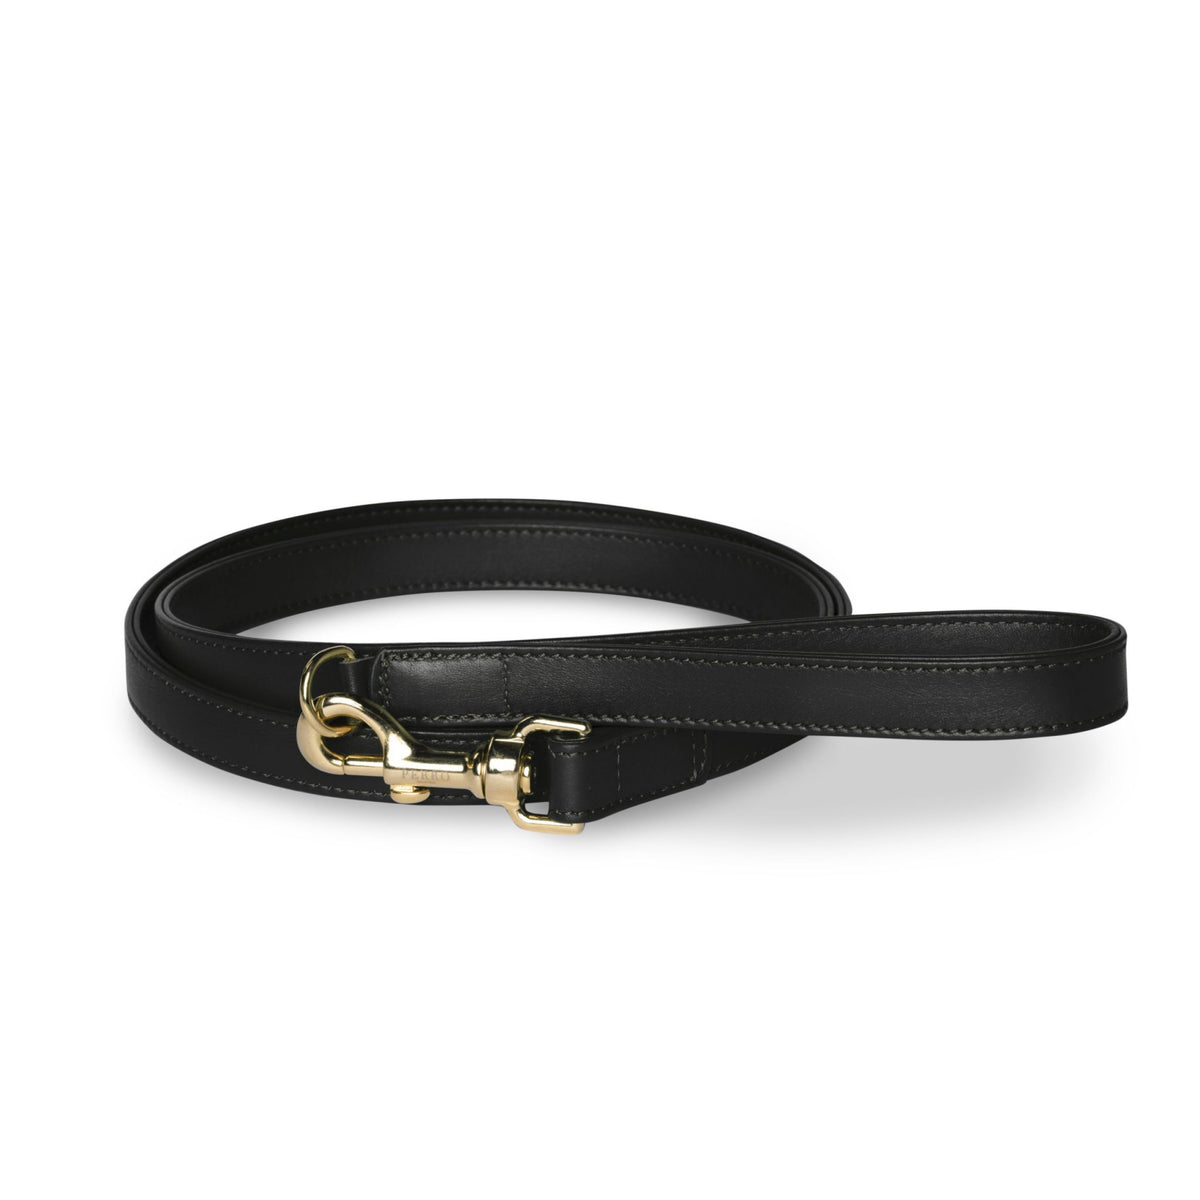 Black leather dog leash